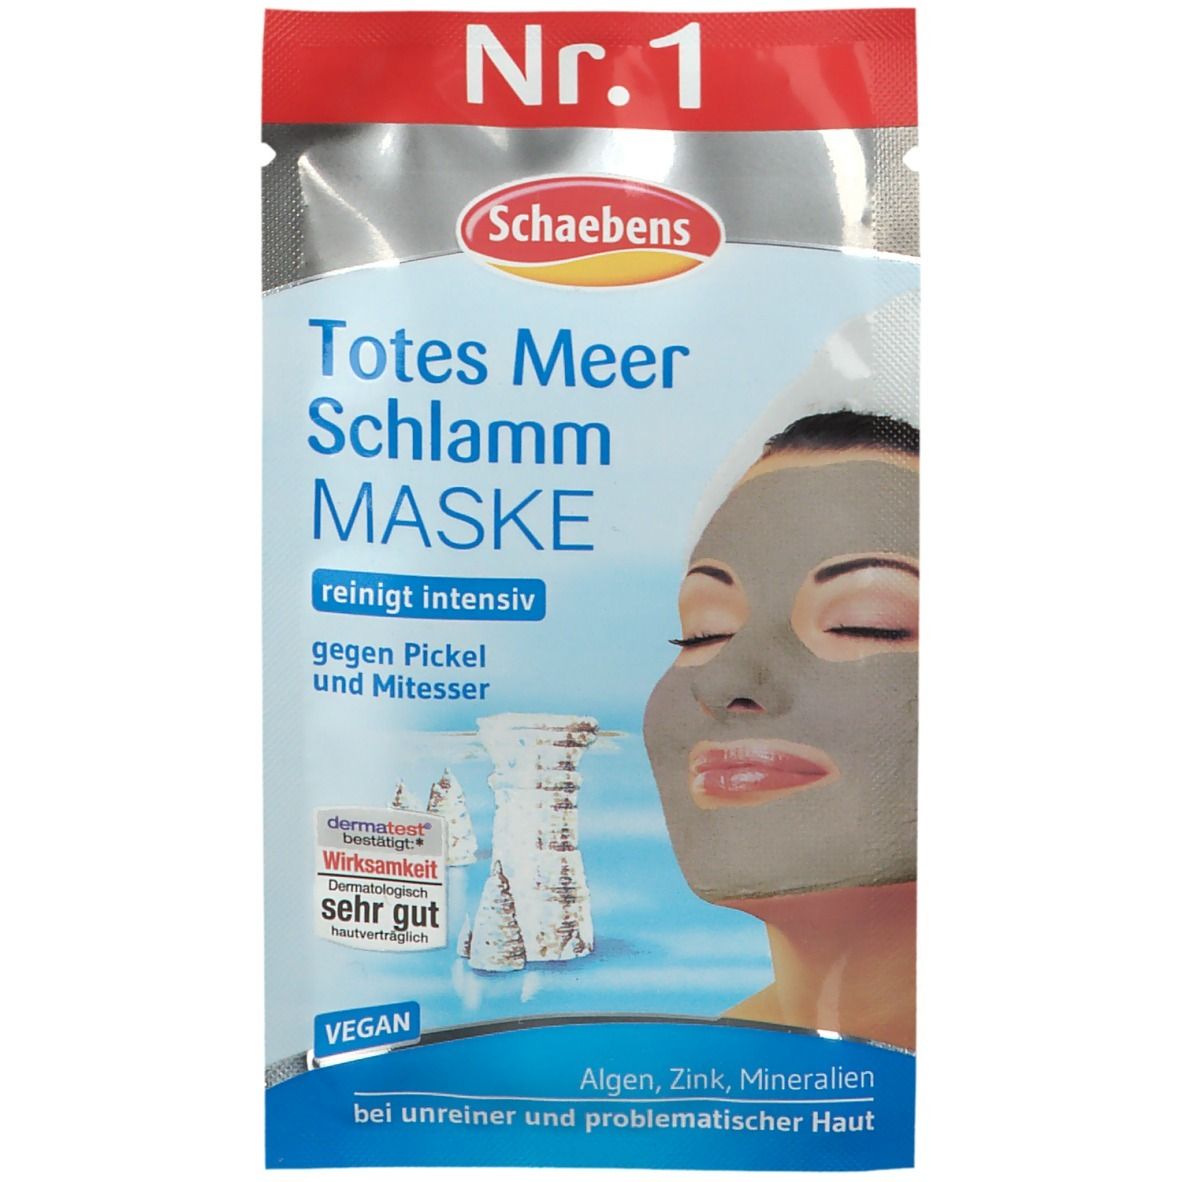 Schaebens Totes Meer Schlamm Maske (Ingredients Explained)